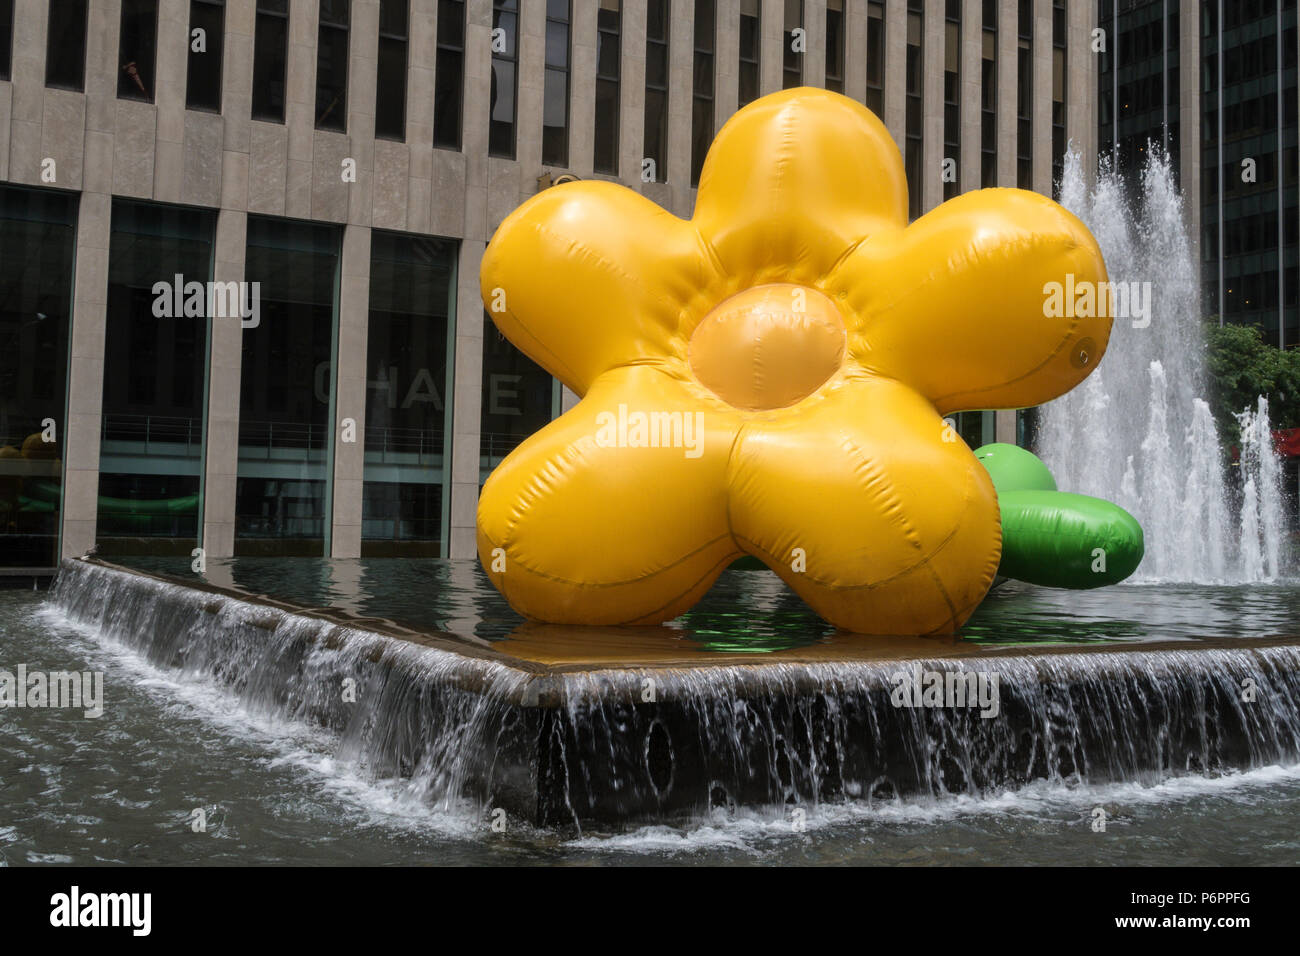 Giant Inflatable Flower Display on Sixth Avenue, NYC, USA Stock Photo